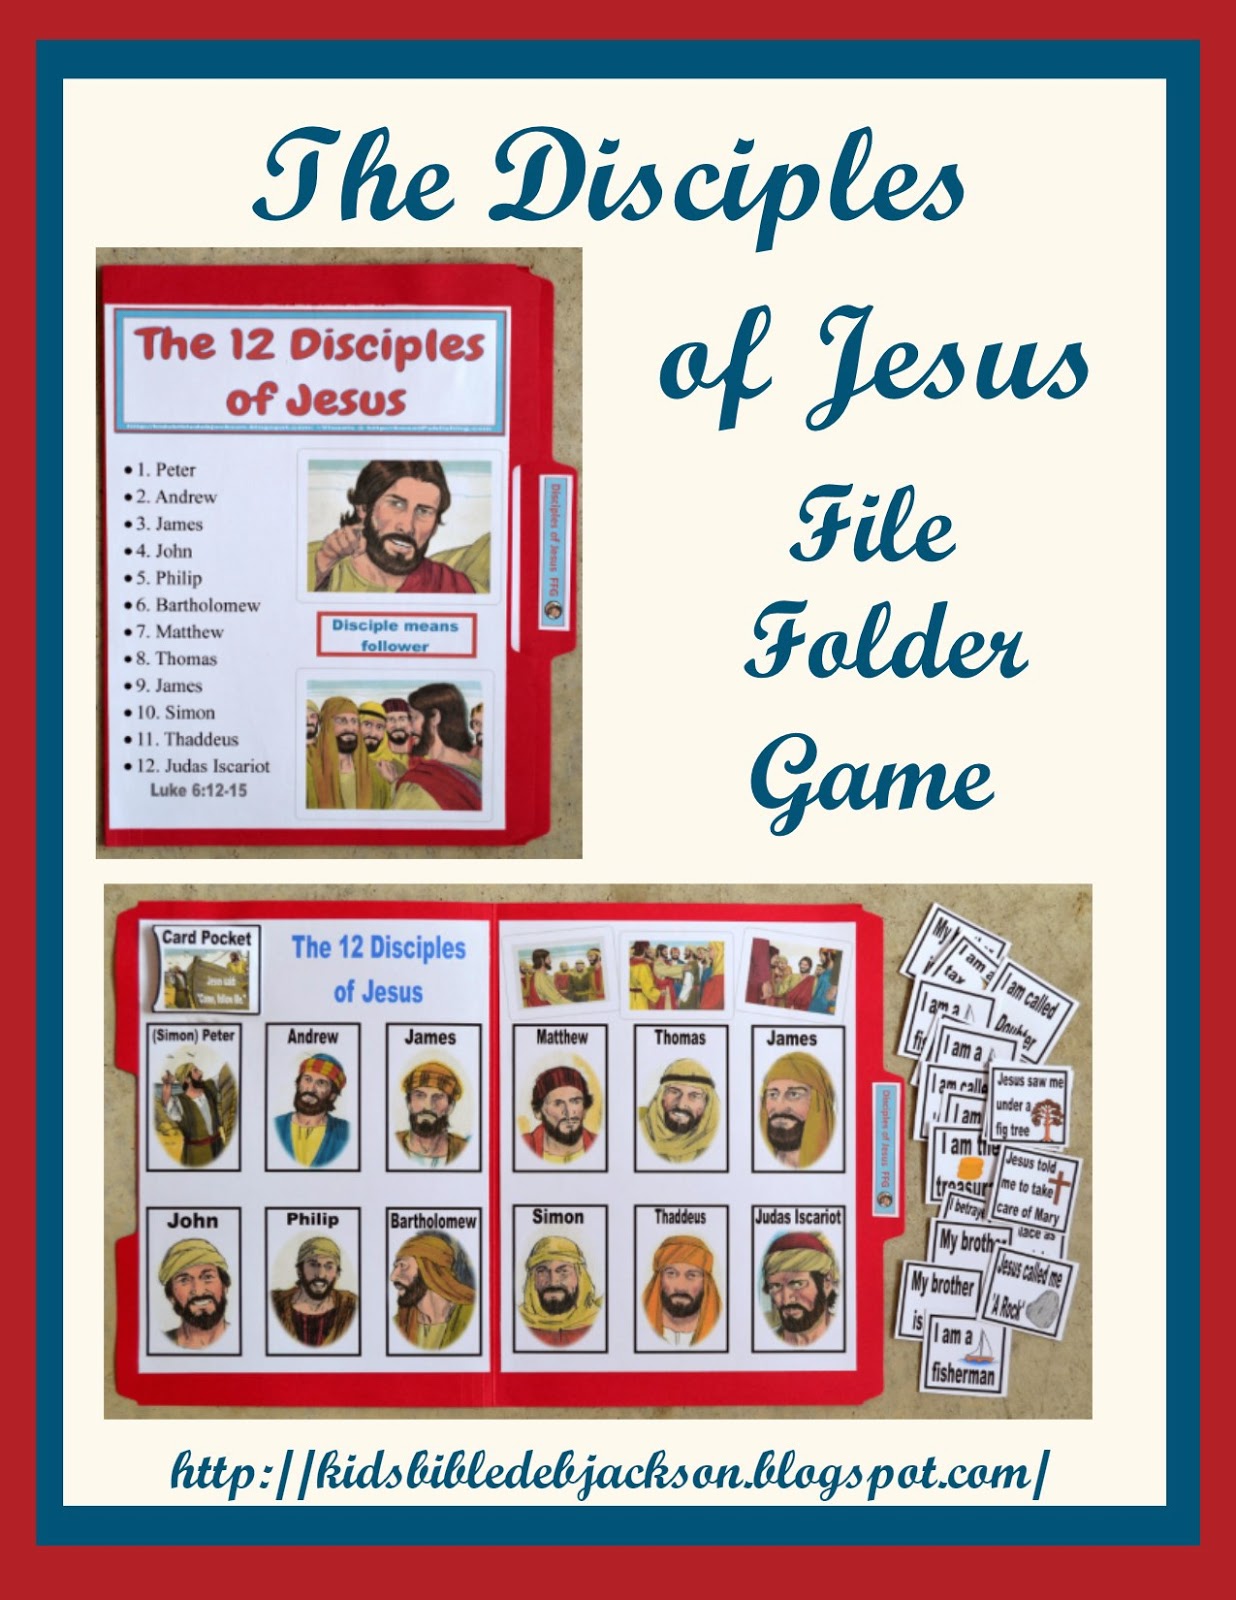 http://kidsbibledebjackson.blogspot.com/2014/03/disciples-vs-apostles-posters-file.html